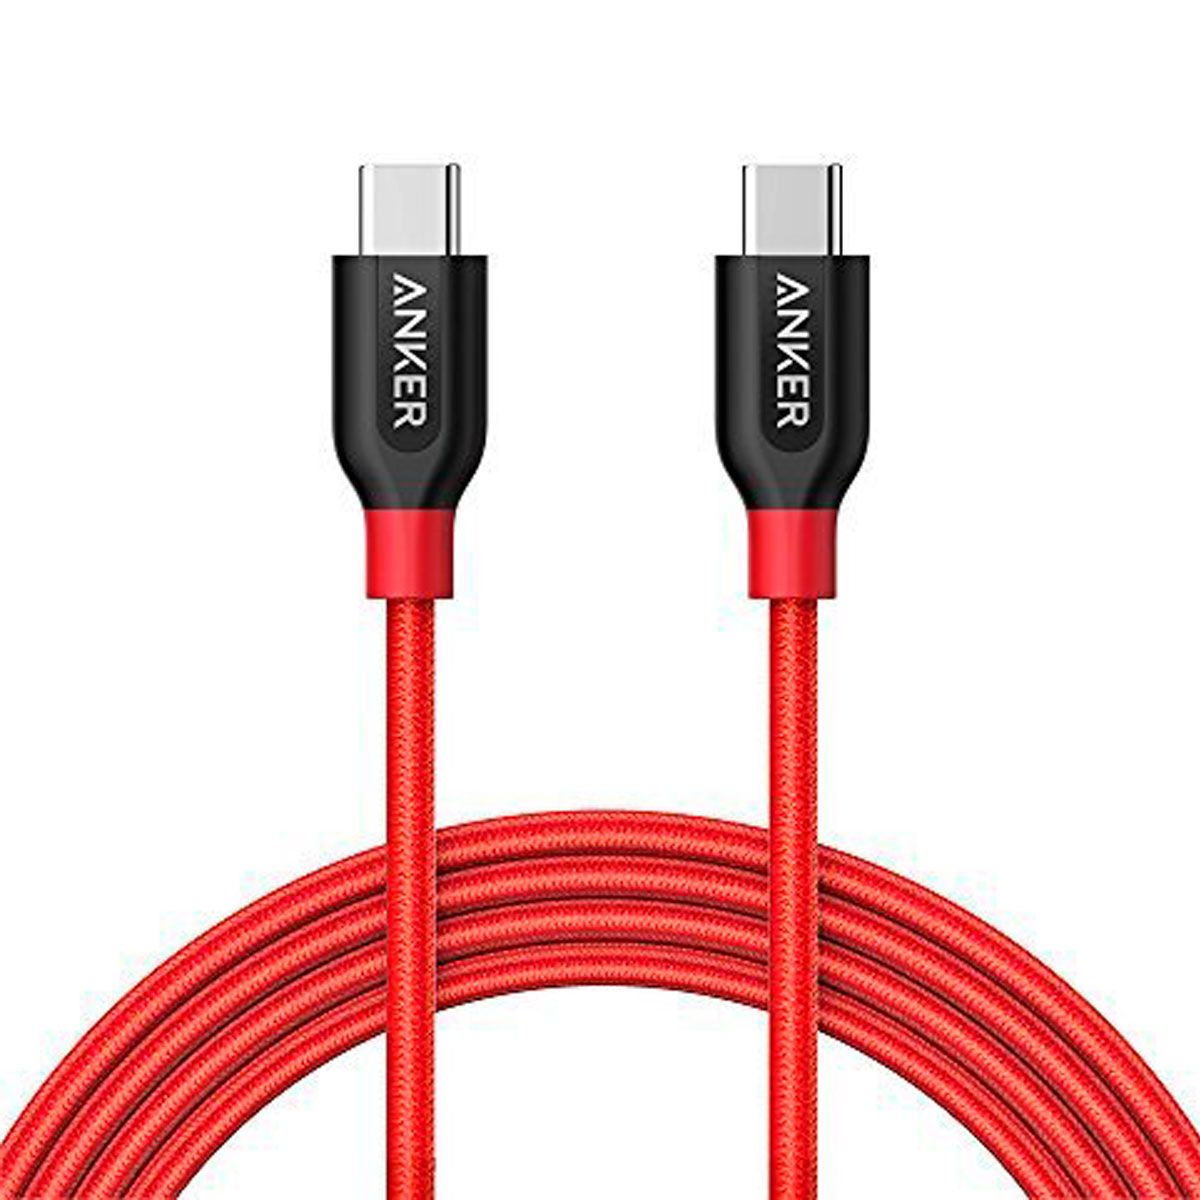 Кабель ANKER PowerLine+ USB-C to USB 3.0 Cable 0.9m - Red, картинка 2